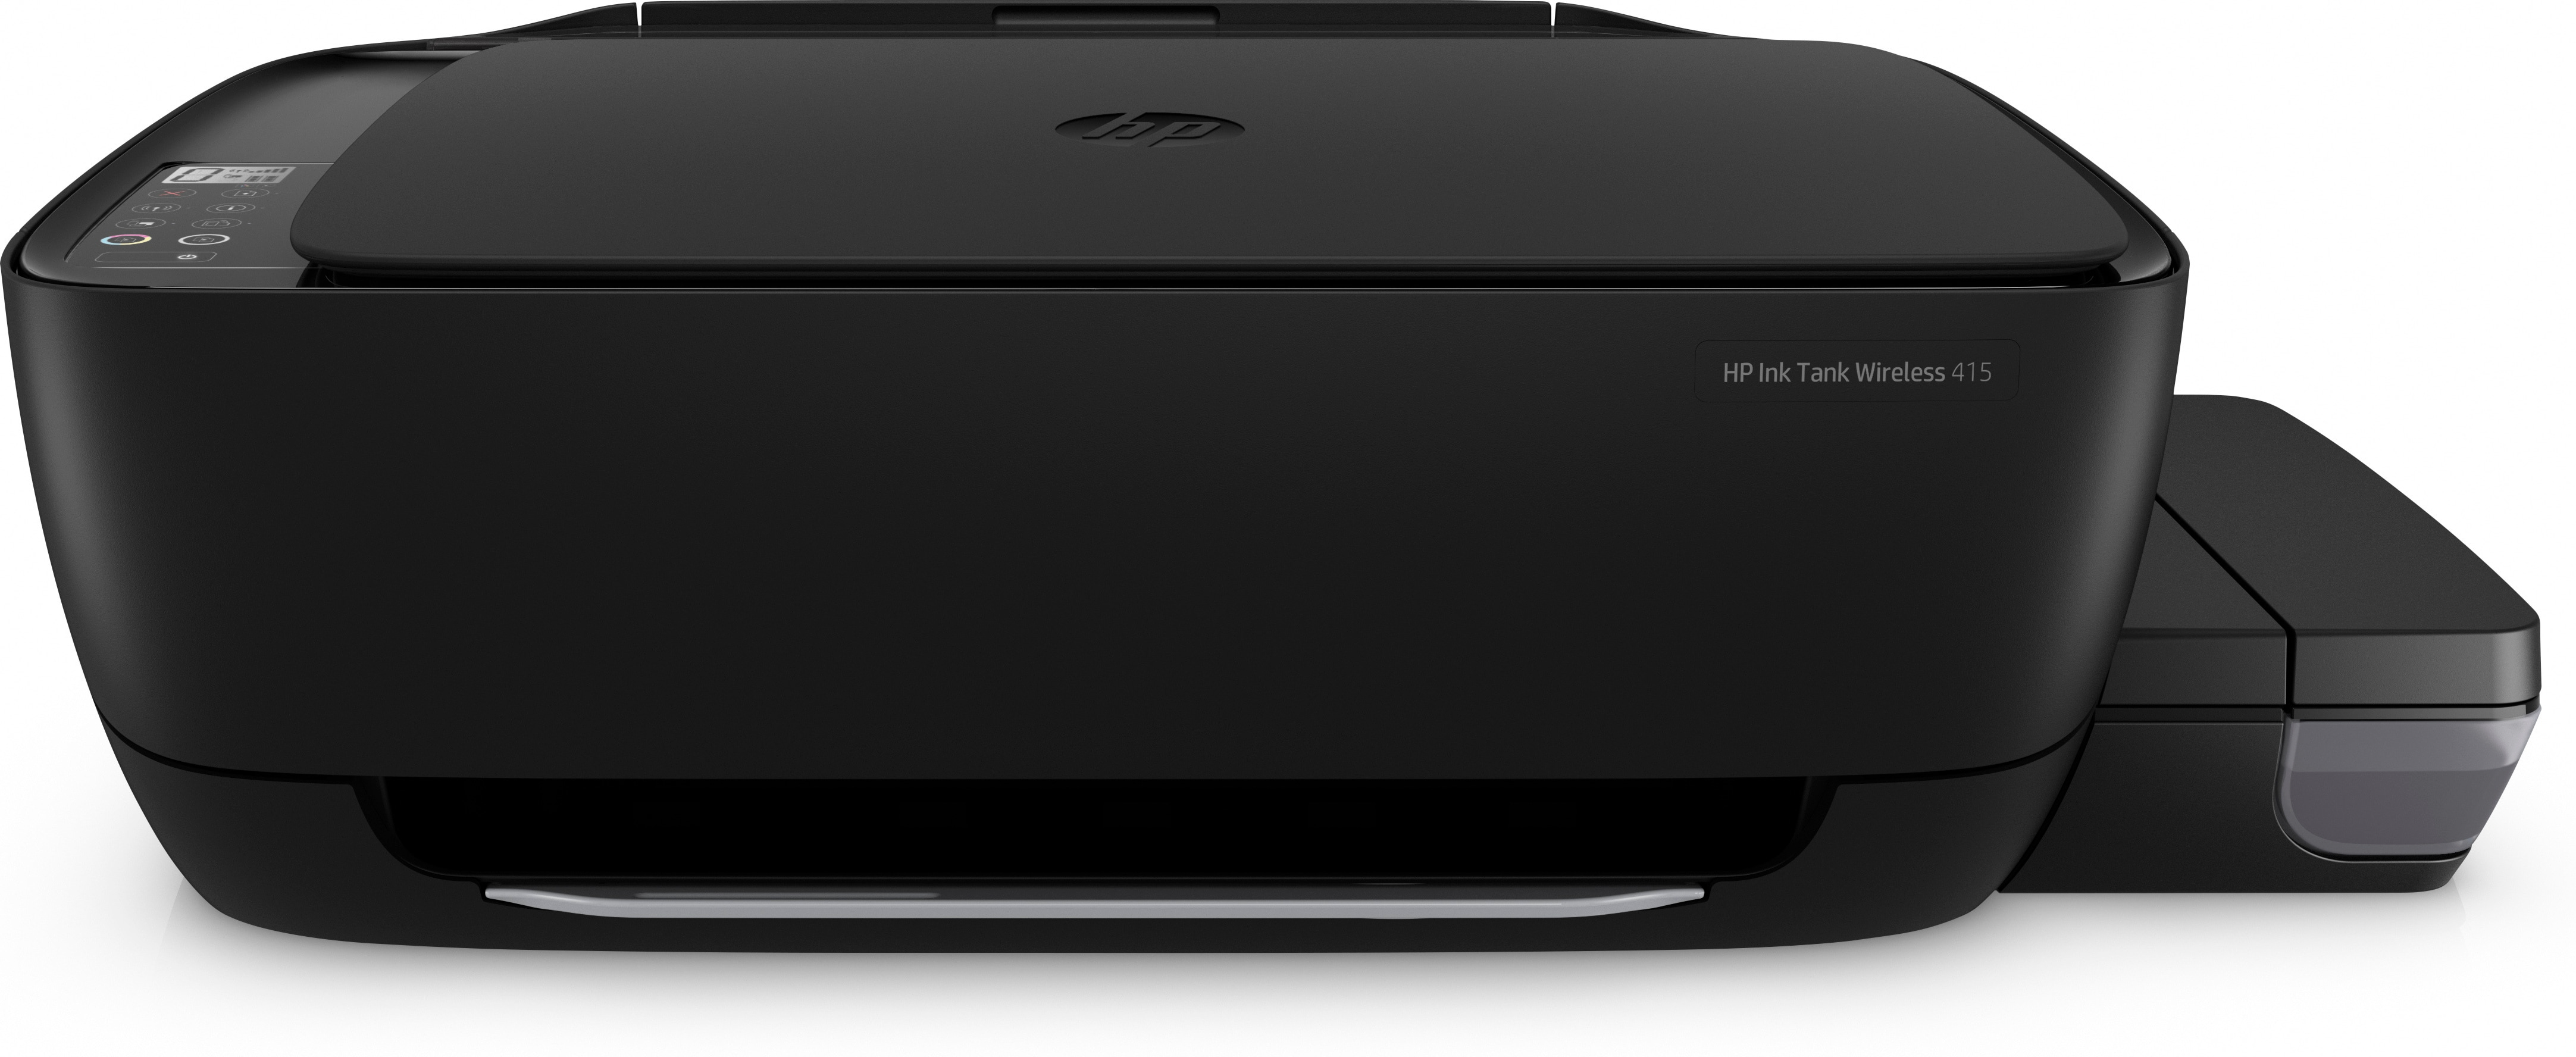 Impresora Multifuncional Hp 415 Ink Tank Wireless 8Ppm Z4B53A